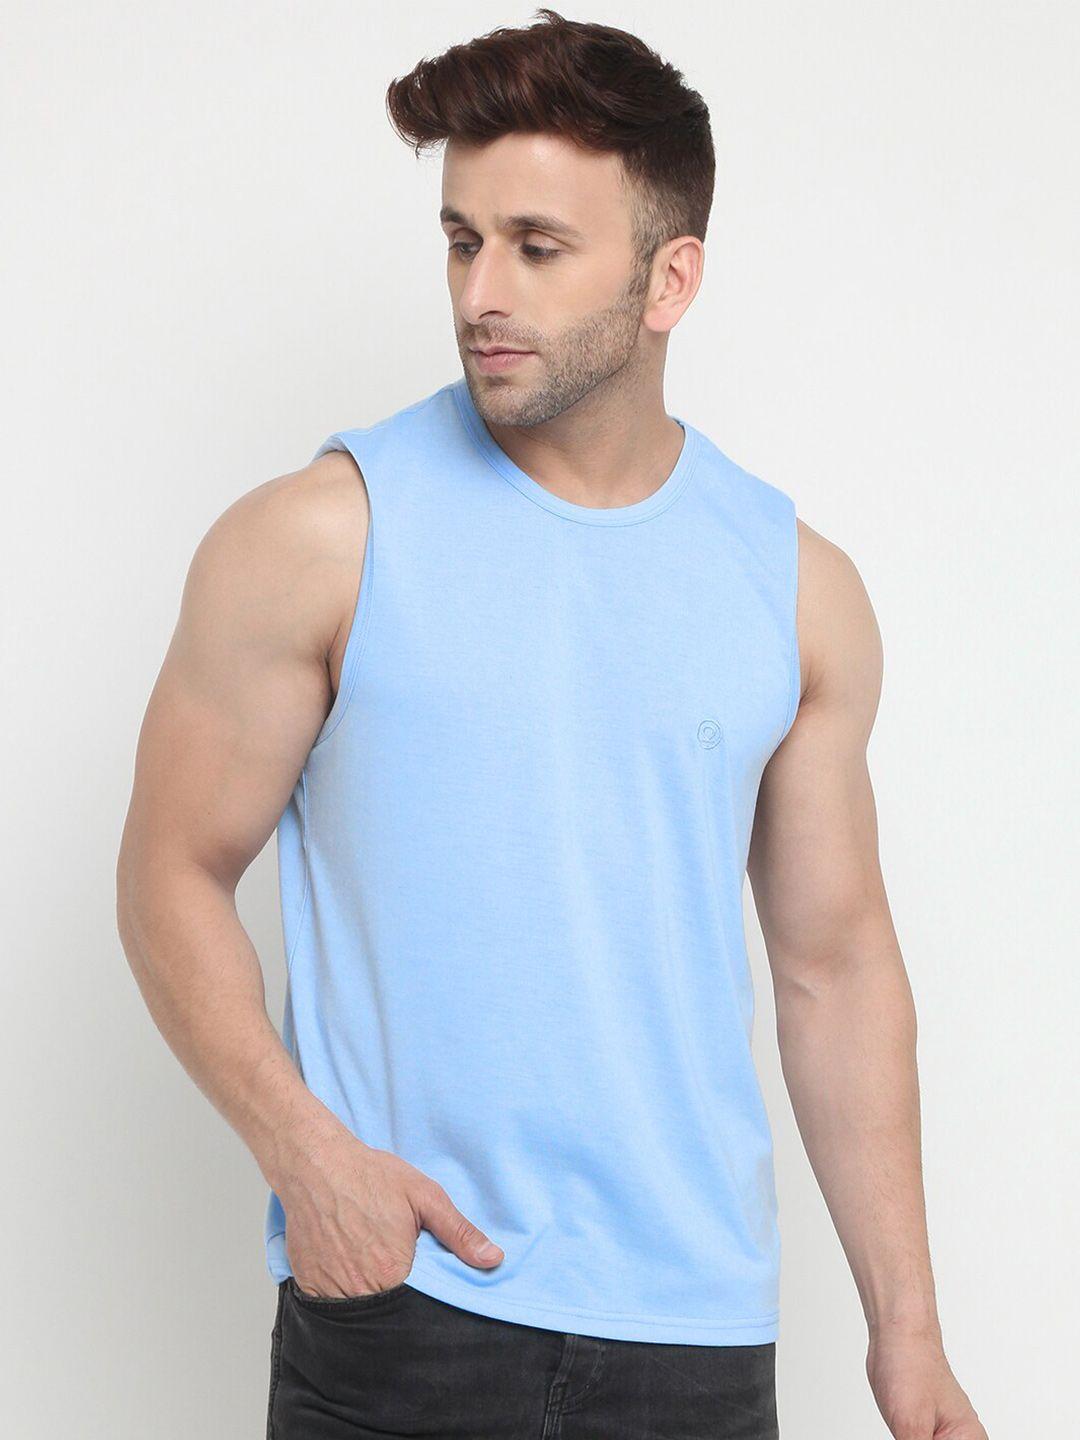 chkokko men blue training or gym t-shirt